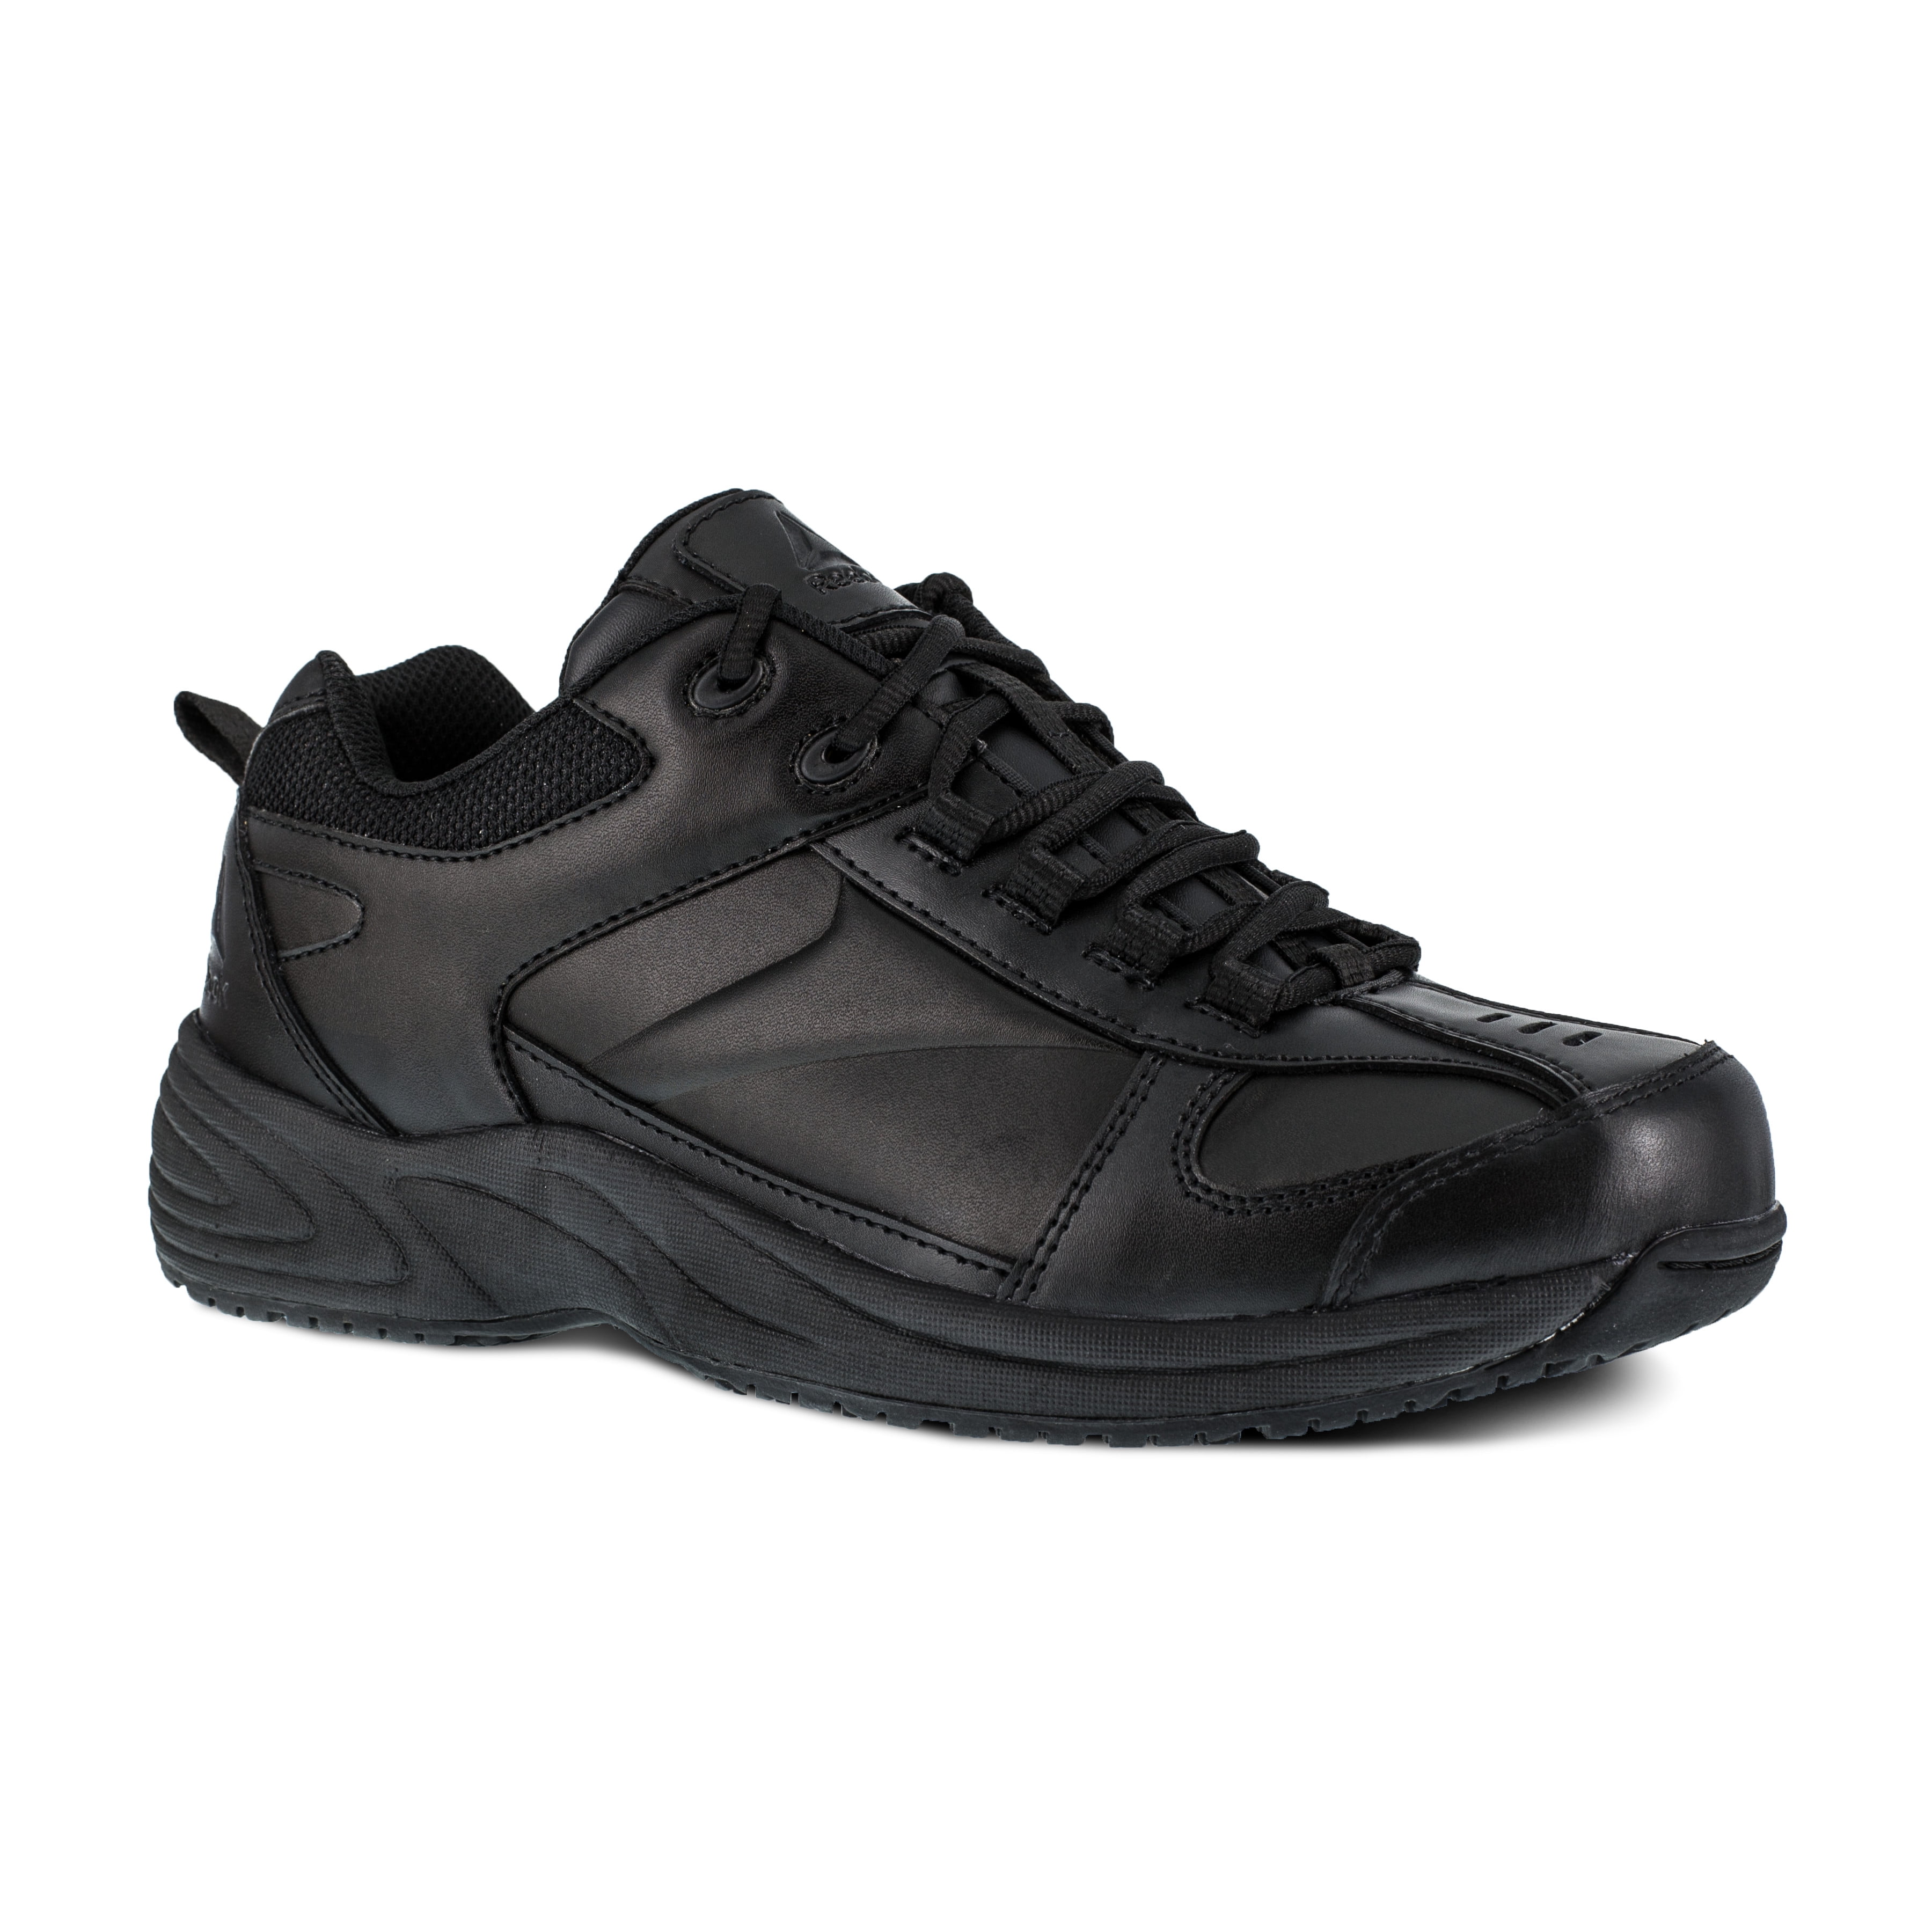 Reebok Work Men's Jorie RB1100 Athletic Safety Shoe, Black, Size 5.5 W  EUC